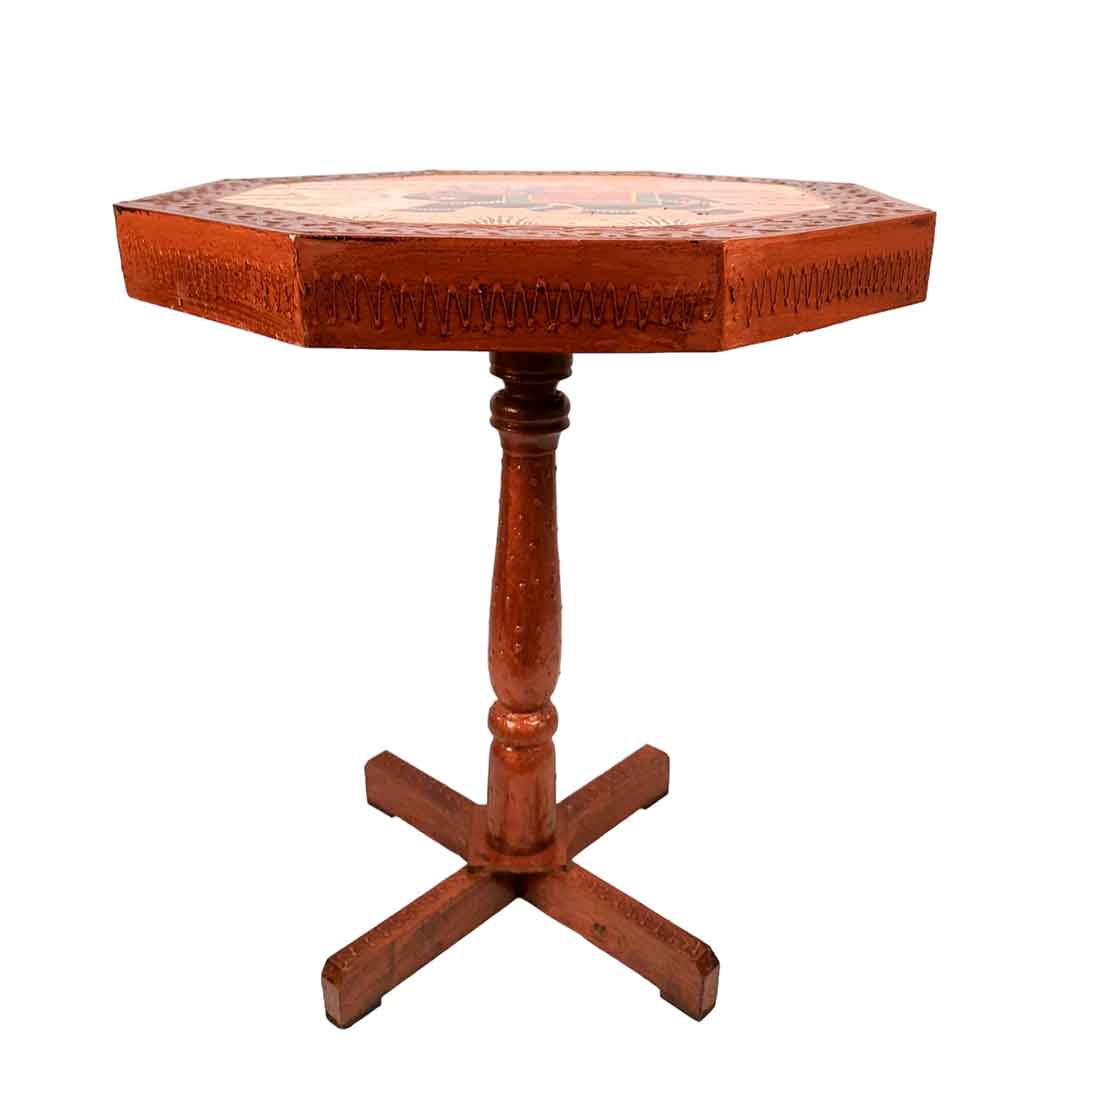 End Tables Wooden | Side Table | Stool - for Living Room, Corner Decor, Home Decor & Gifts - 20 Inch - Apkamart